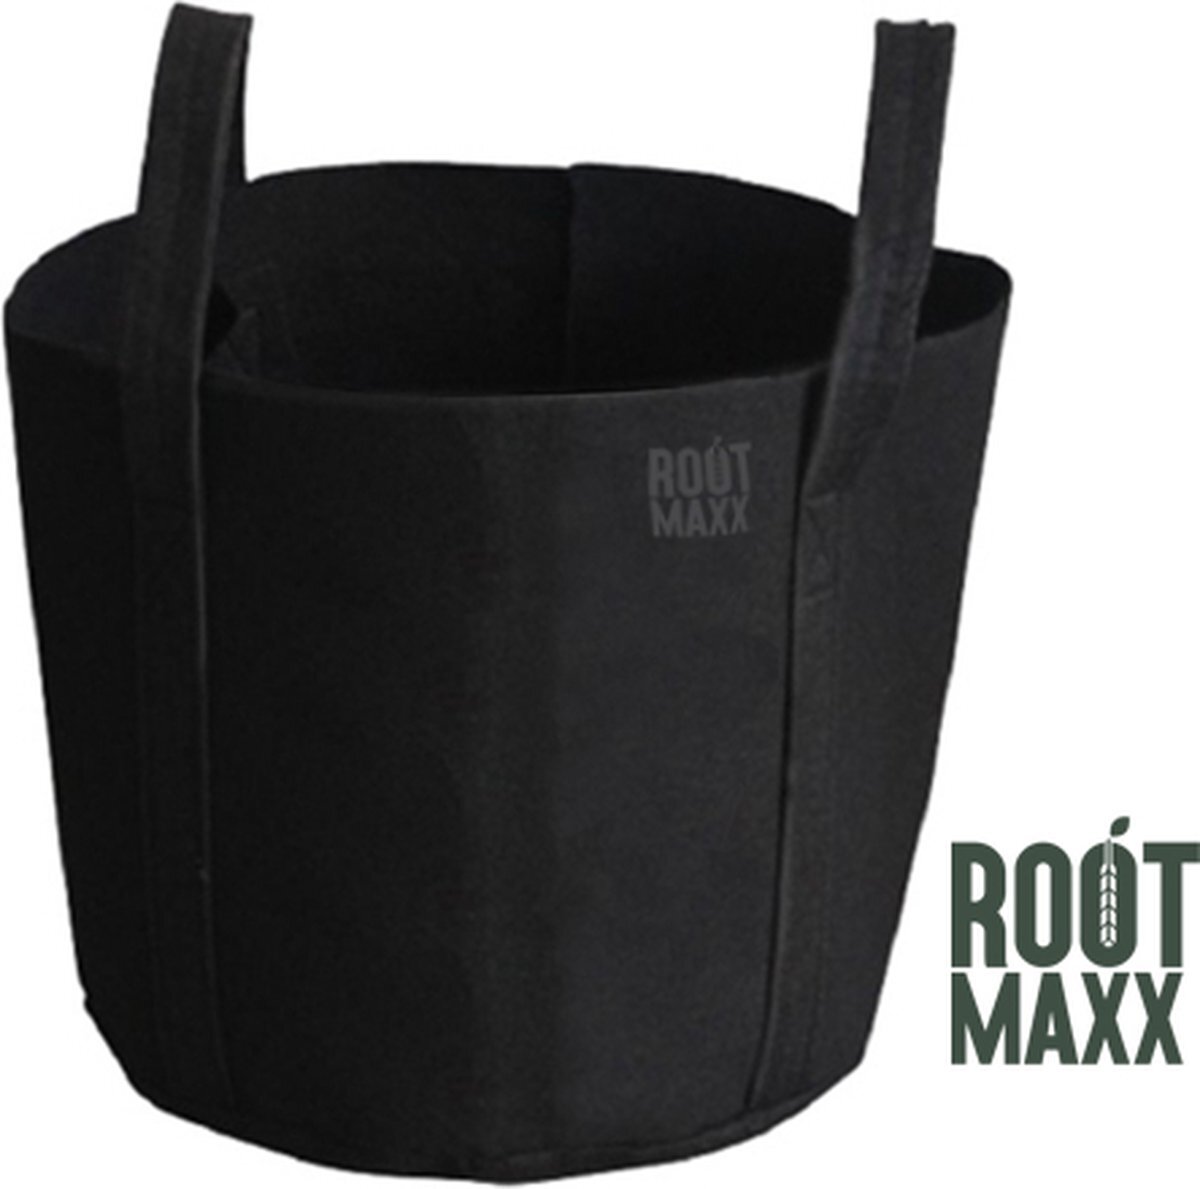 Rootmaxx Root Maxx Plantpot 15 Liter ø25x28 Plantzak